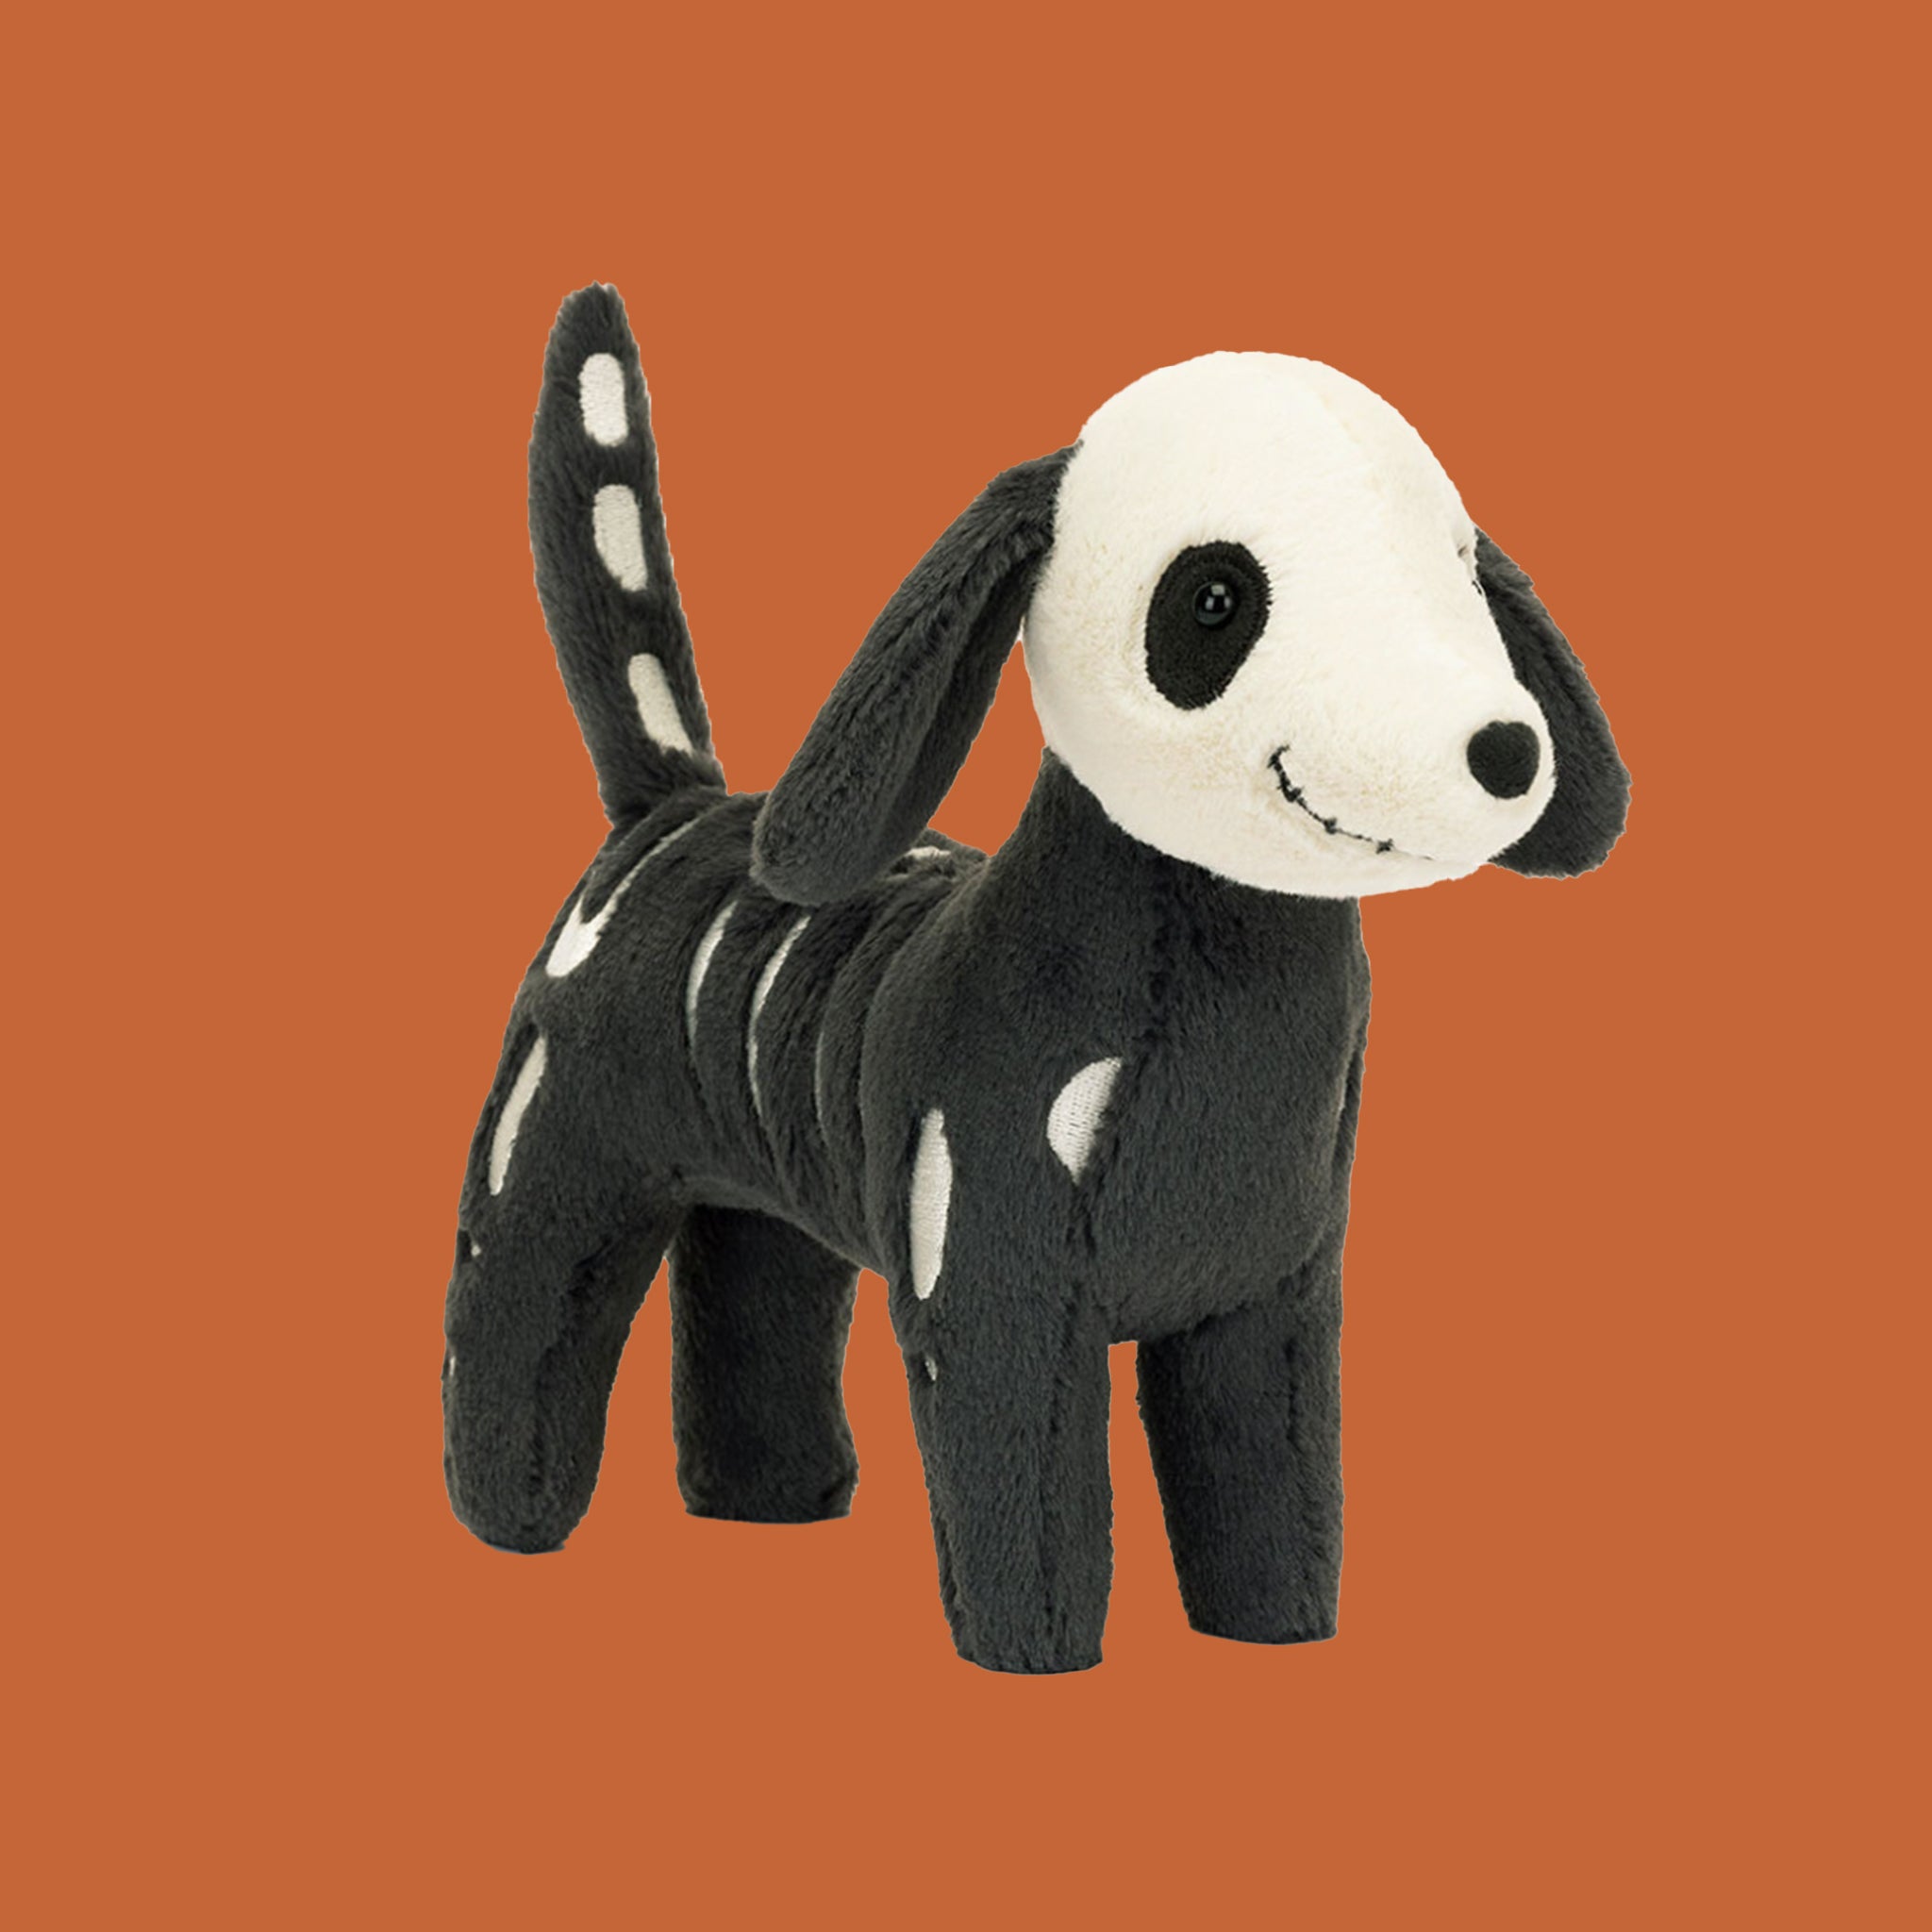 A black and white skeledog shaped stuffed toy.  